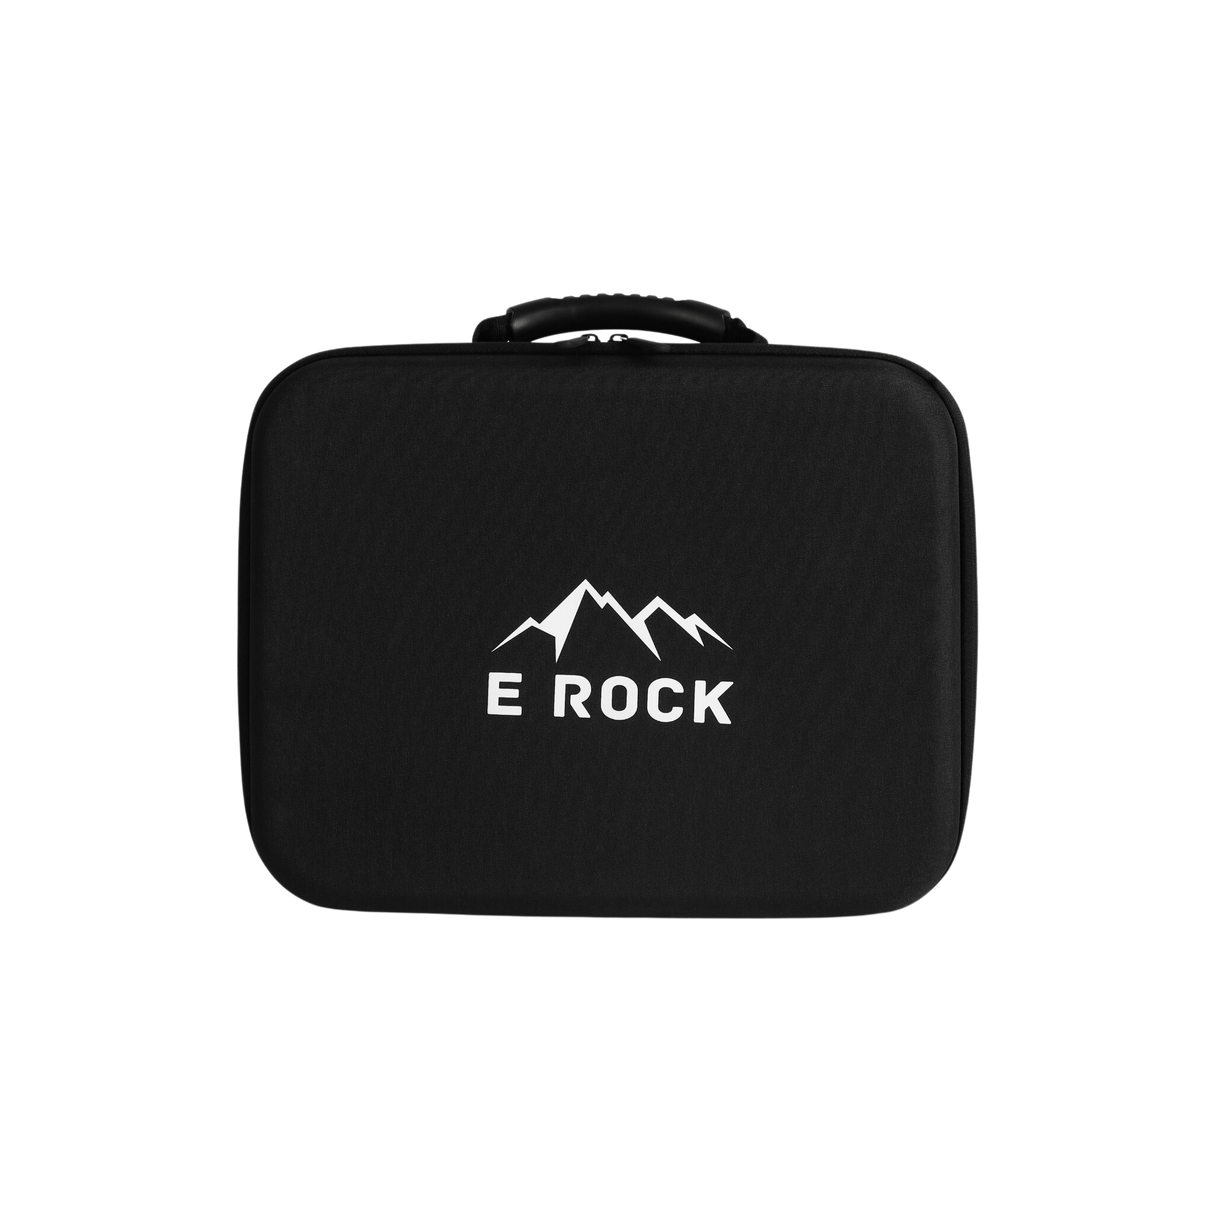 eRock Pro opbergtas laadkabel of mobiele lader